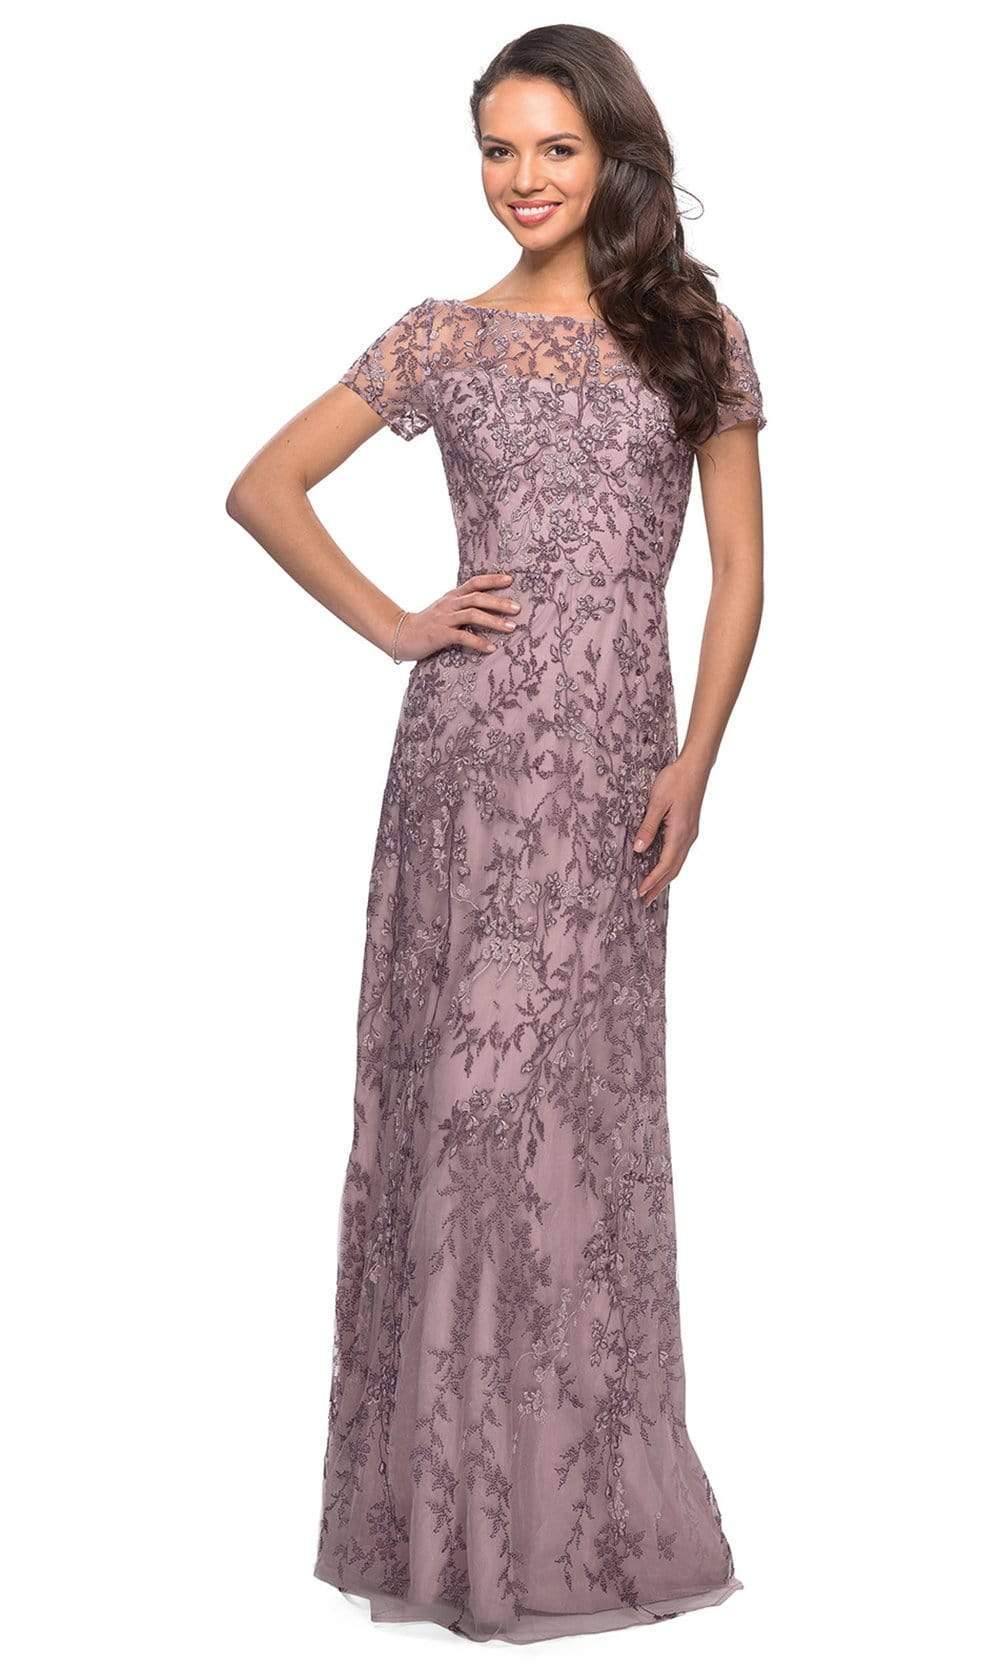 La Femme - 27956 Bead Embellished Bateau Sheath Dress Mother of the Bride Dresses 4 / Dusty Lilac